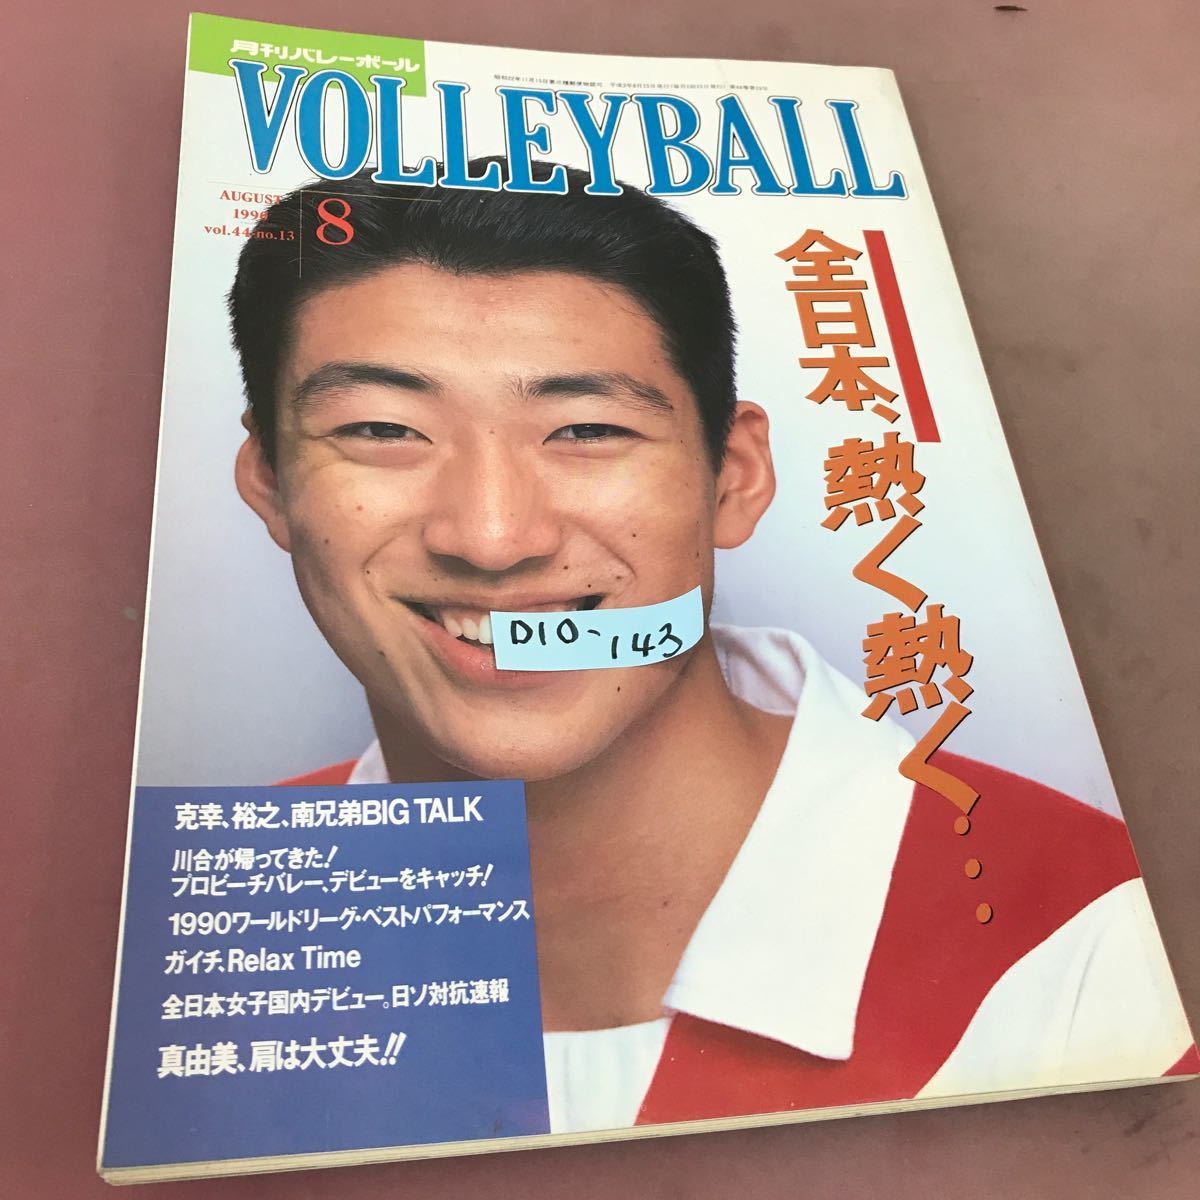 D10-143 月刊バレーボール 1990.8 Vol.44 No.13 全日本、熱く熱く‥ 日本文化出版 _画像1